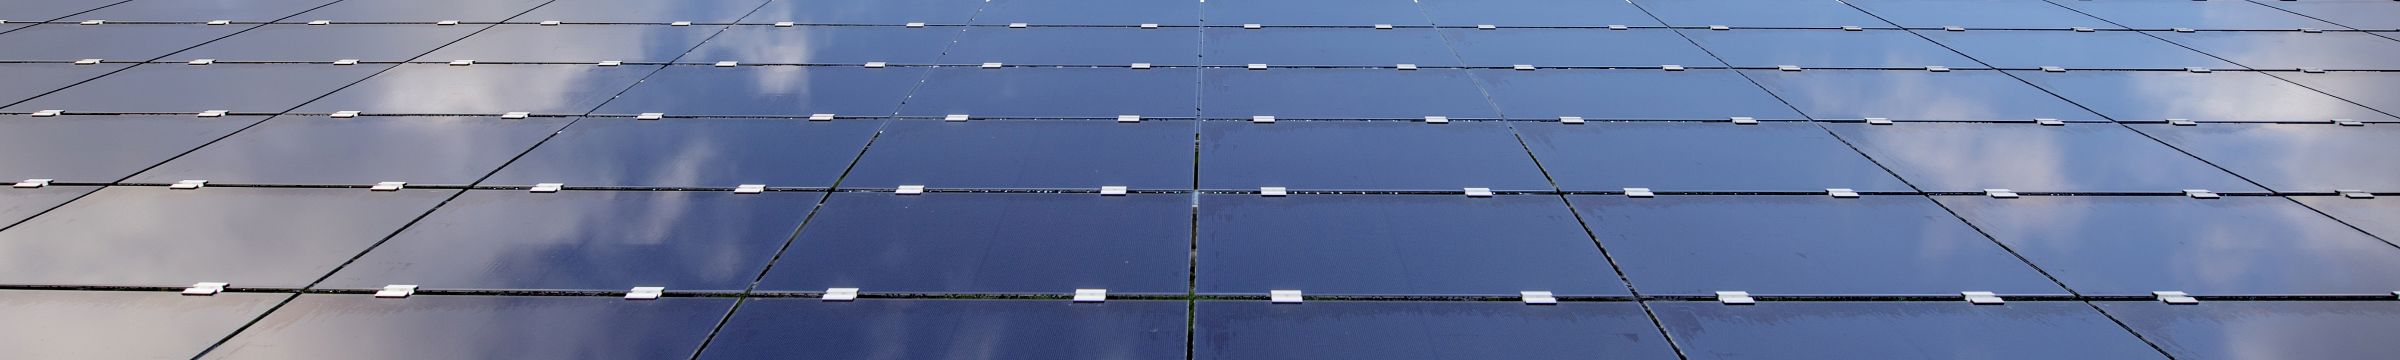 Solar panels reflecting the sky